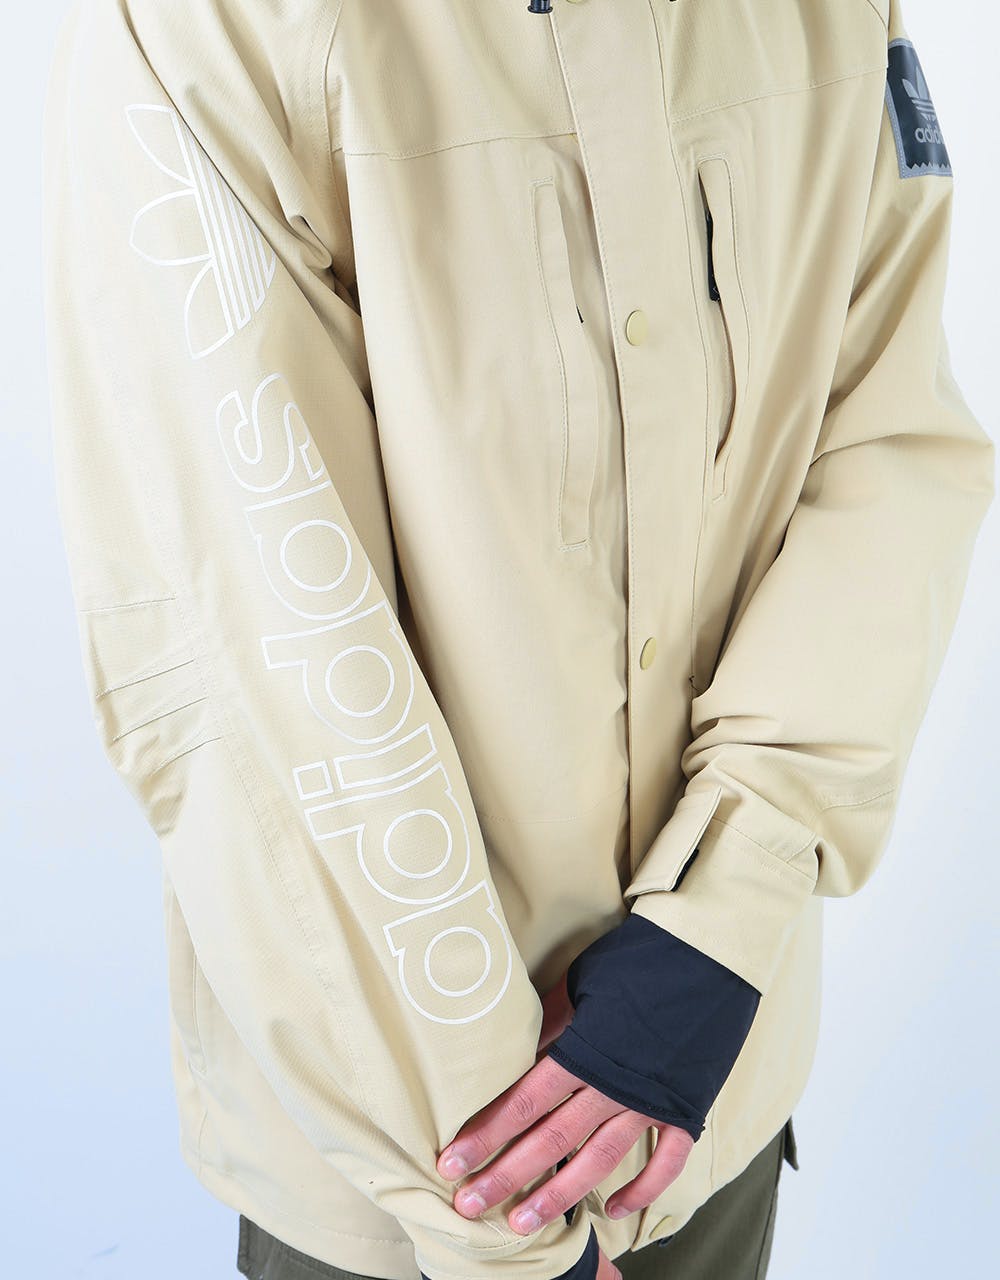 Adidas Utility 2020 Snowboard Jacket - Sand/Collegiate Gold